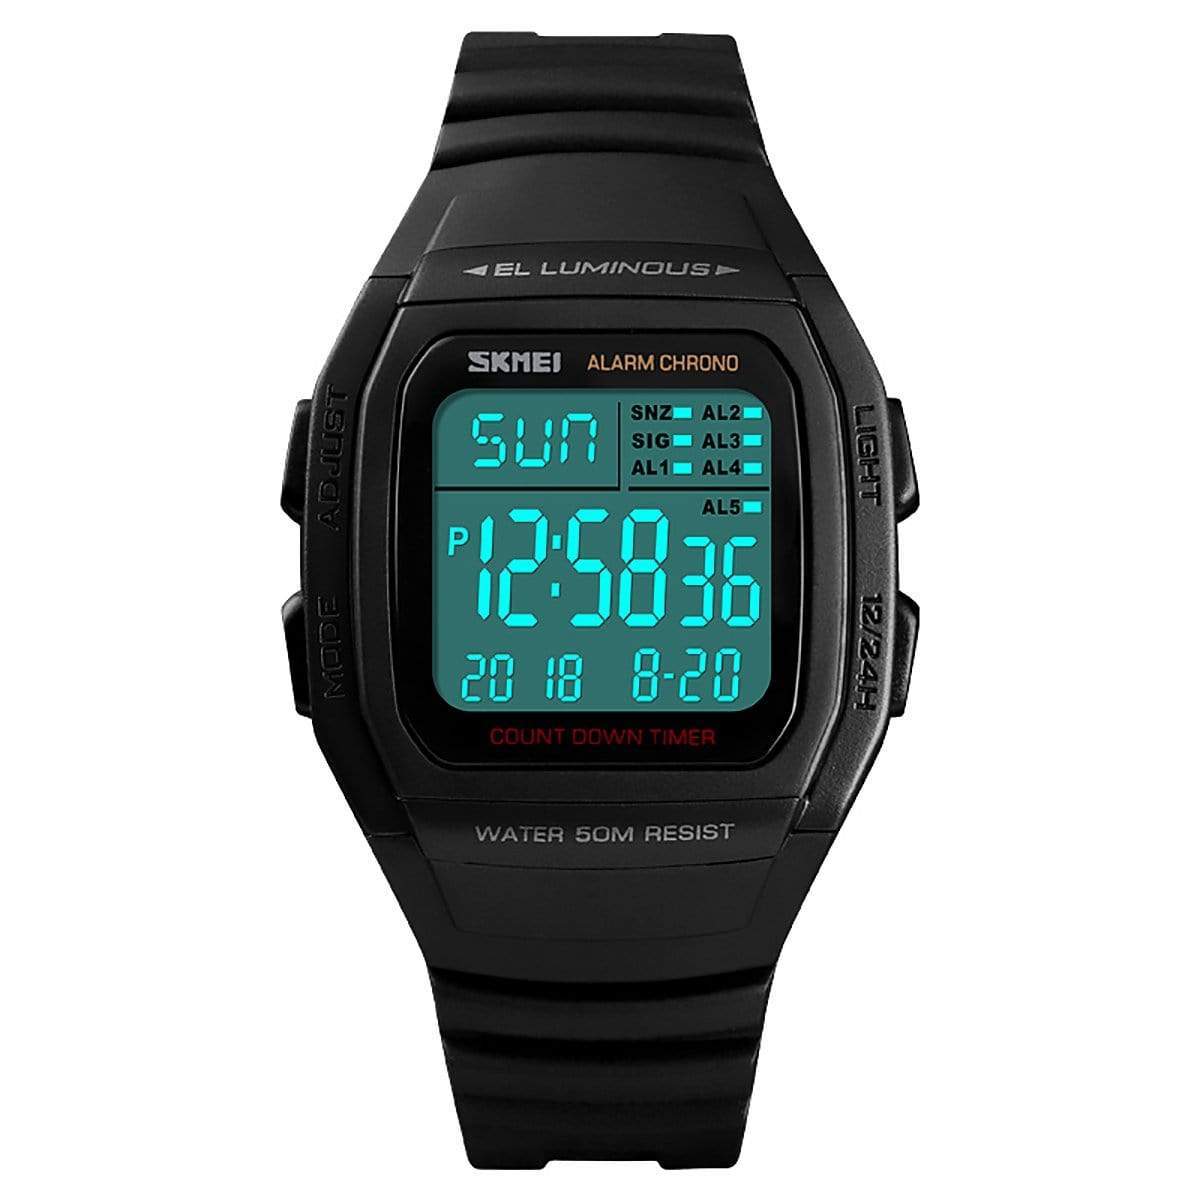 Skmei 1278 Original Square Dial watch Waterproof Alarm Electronic Clock Fashion Wrist Watch Sports Digital Watch For Boys and Girls freeshipping